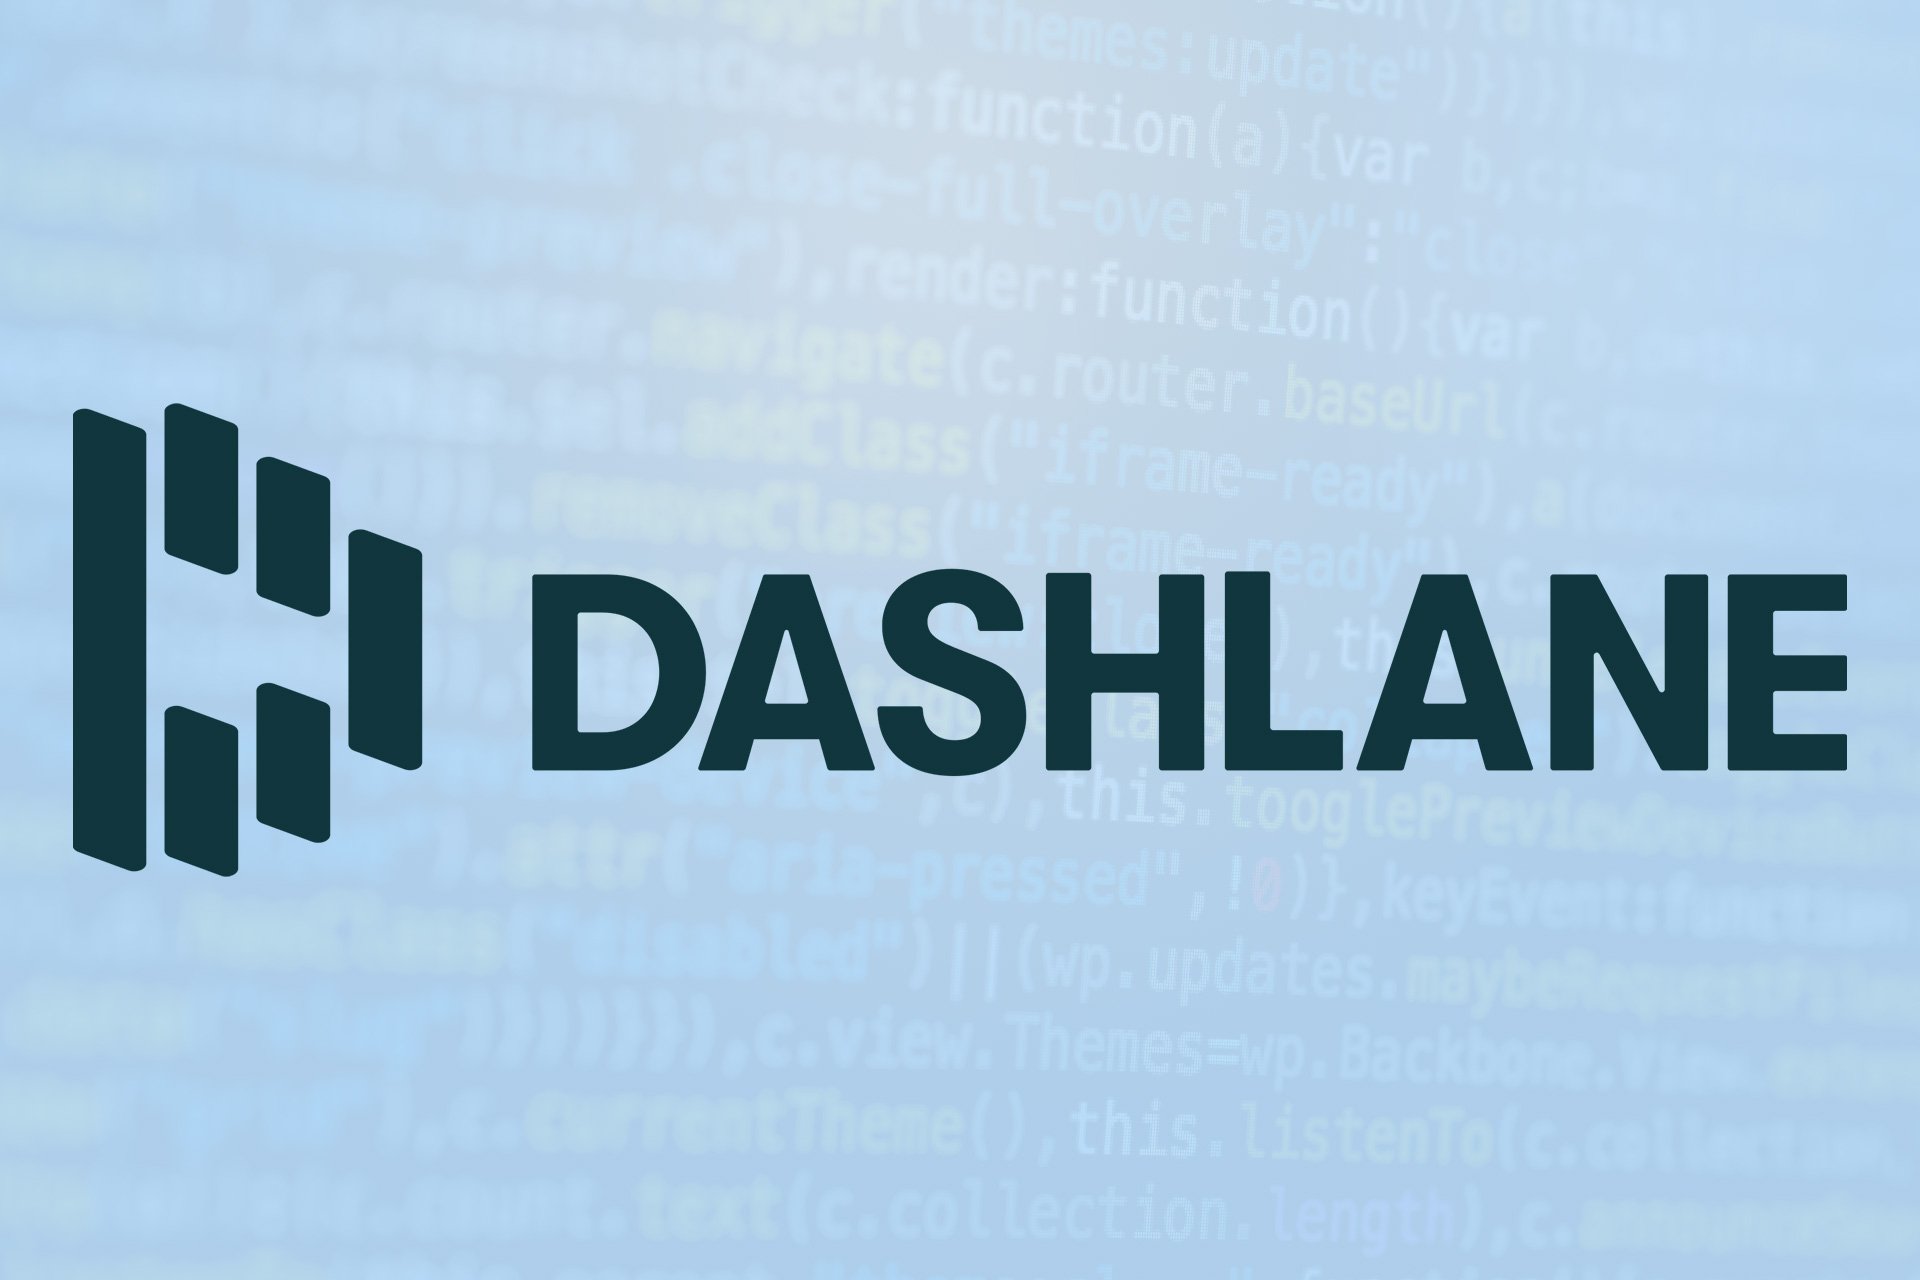 Get 50% Off Premium Plan on Dashlane For Cyber Monday